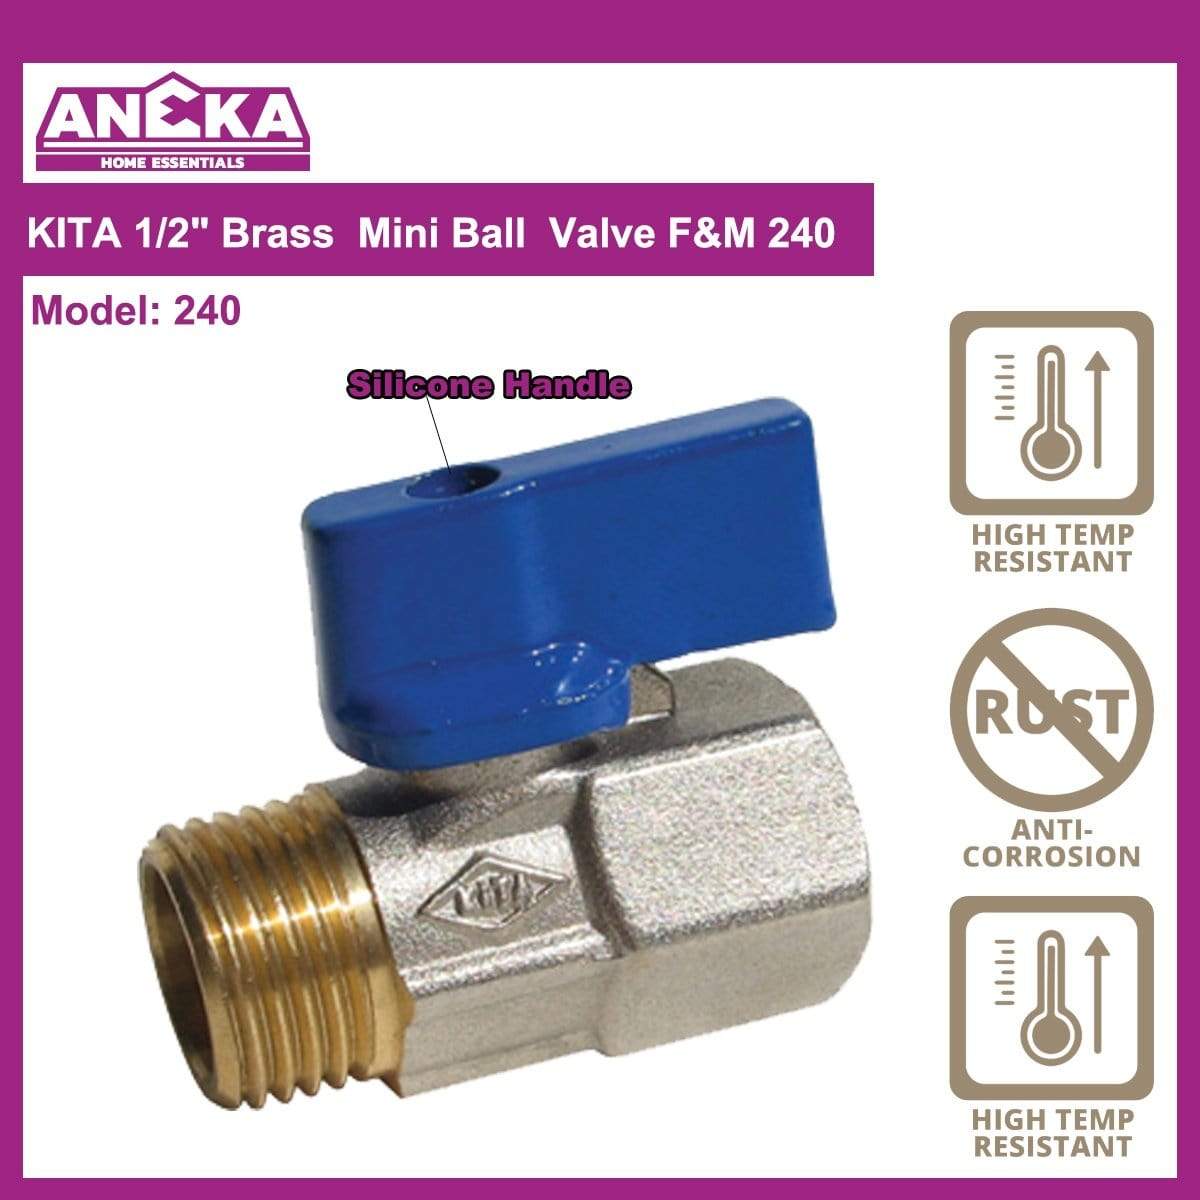 KITA 1/2" Brass Mini Ball Valve F&M 240